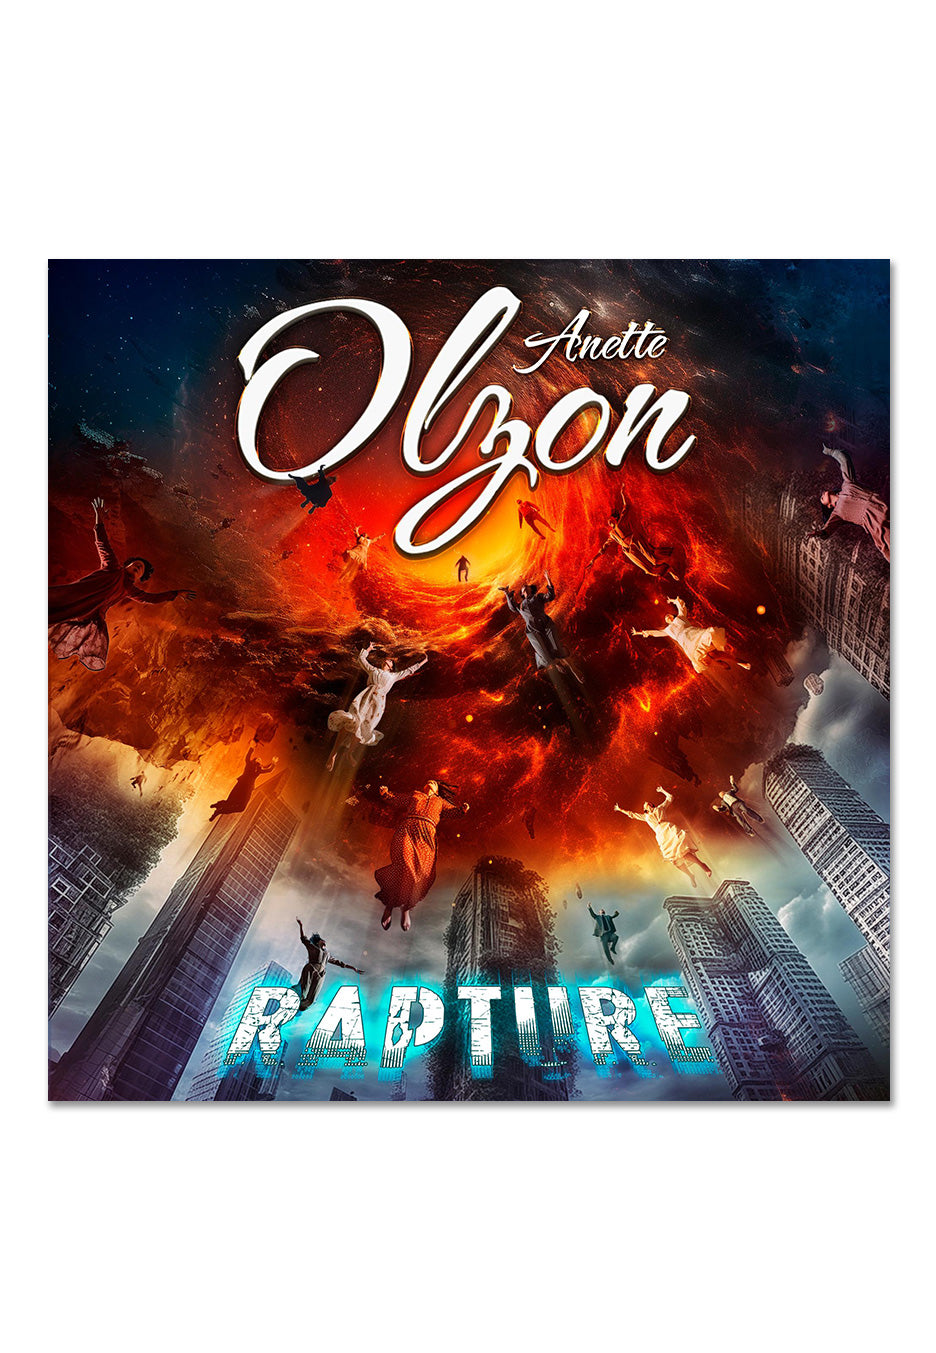 Anette Olzon - Rapture - CD